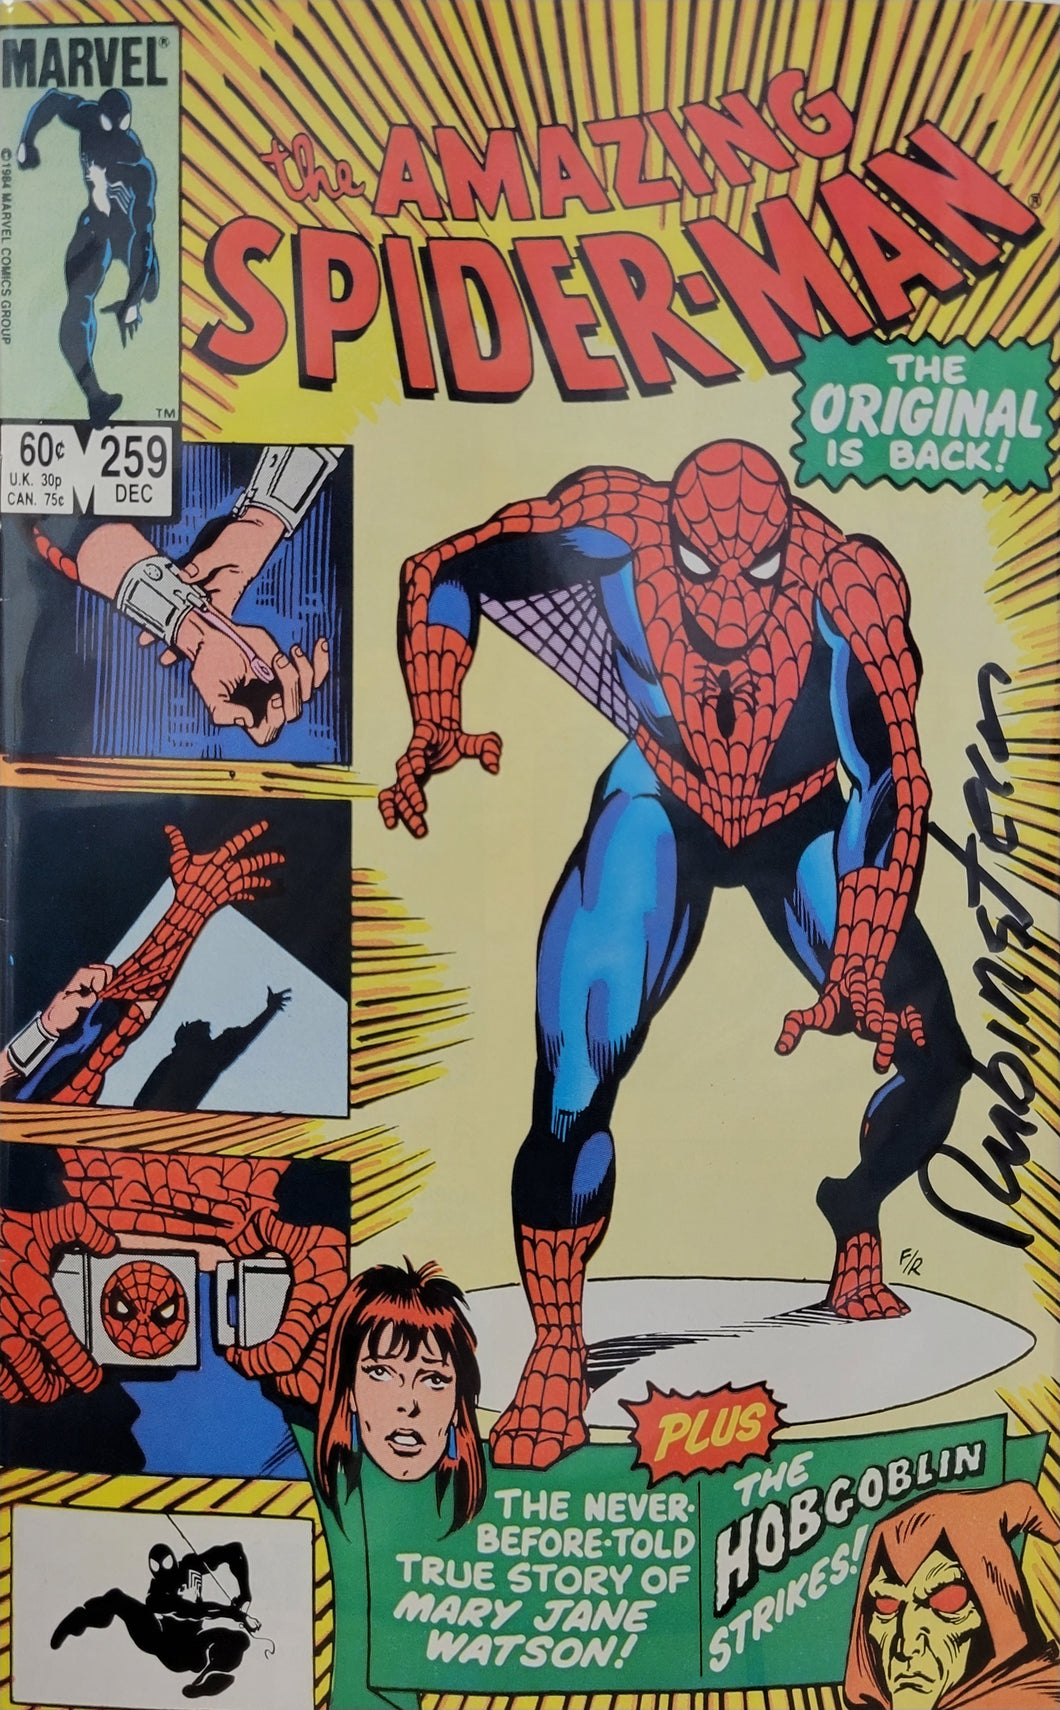 Amazing Spider-Man #259 Signed by Joe Rubinstein w/COA